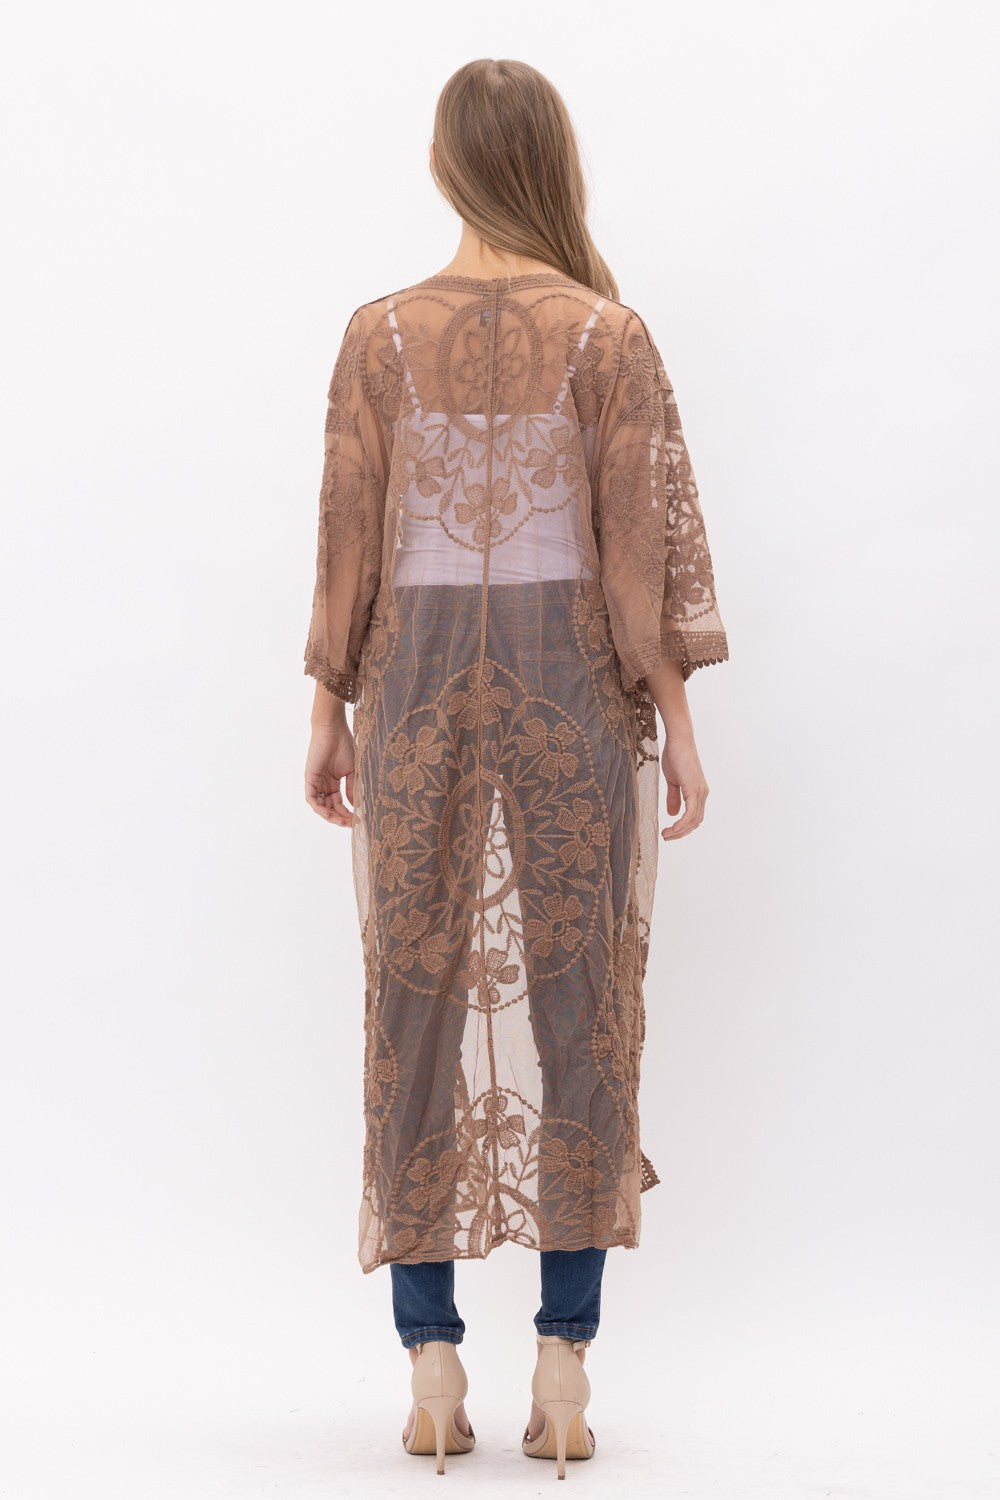 The Anika Embroidered Bohemian Lace Duster Kimono - Mocha